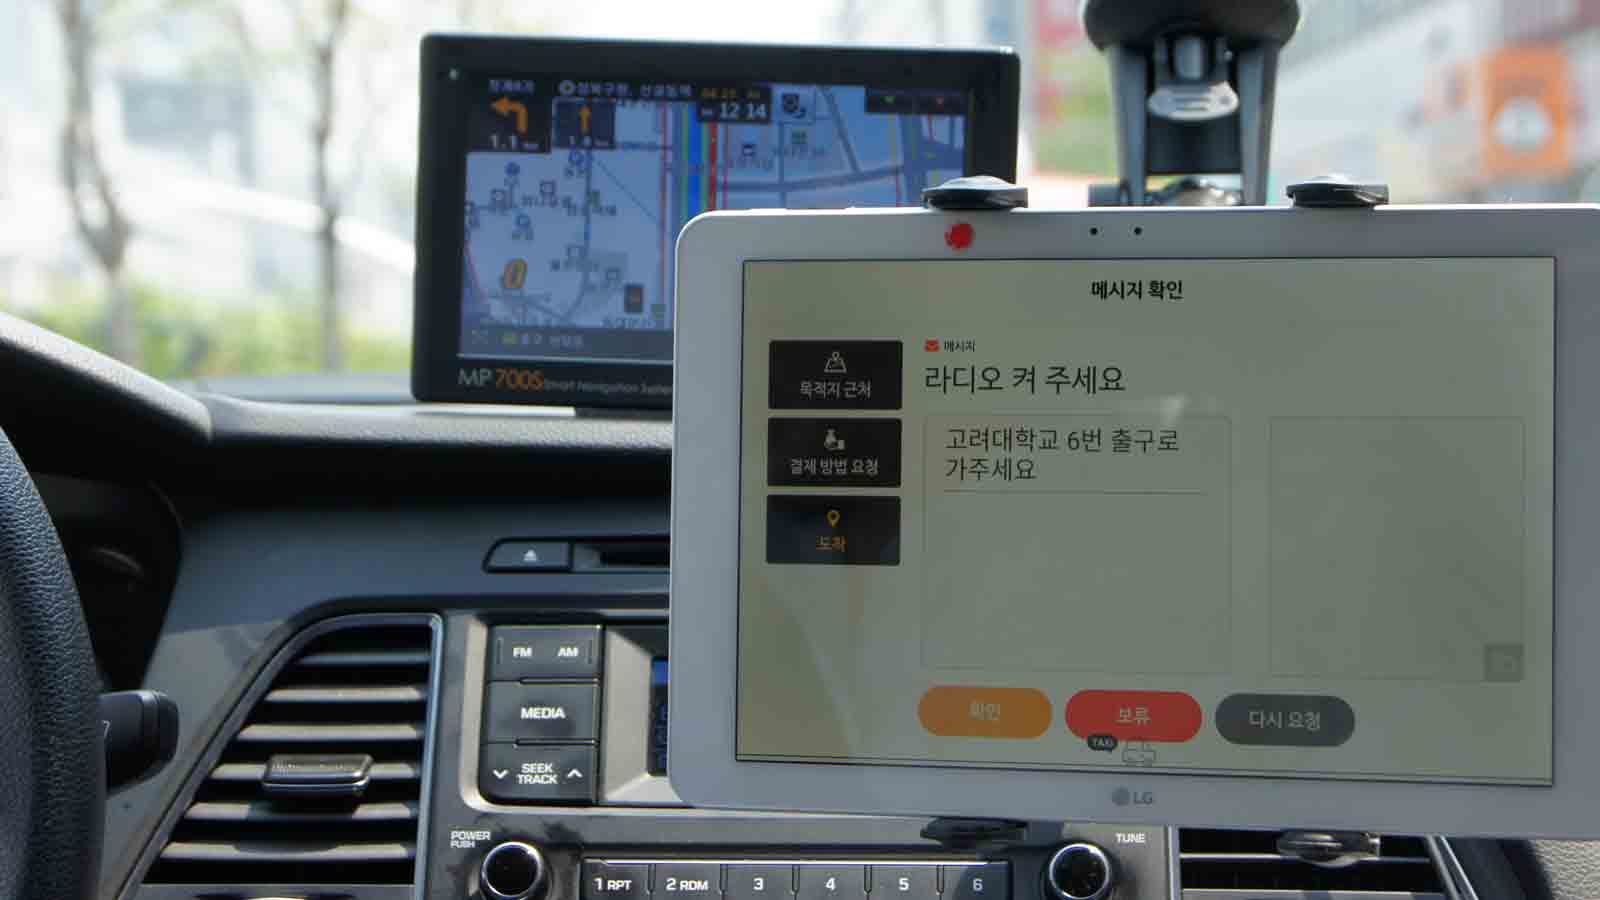 Taxi meter in South Korea